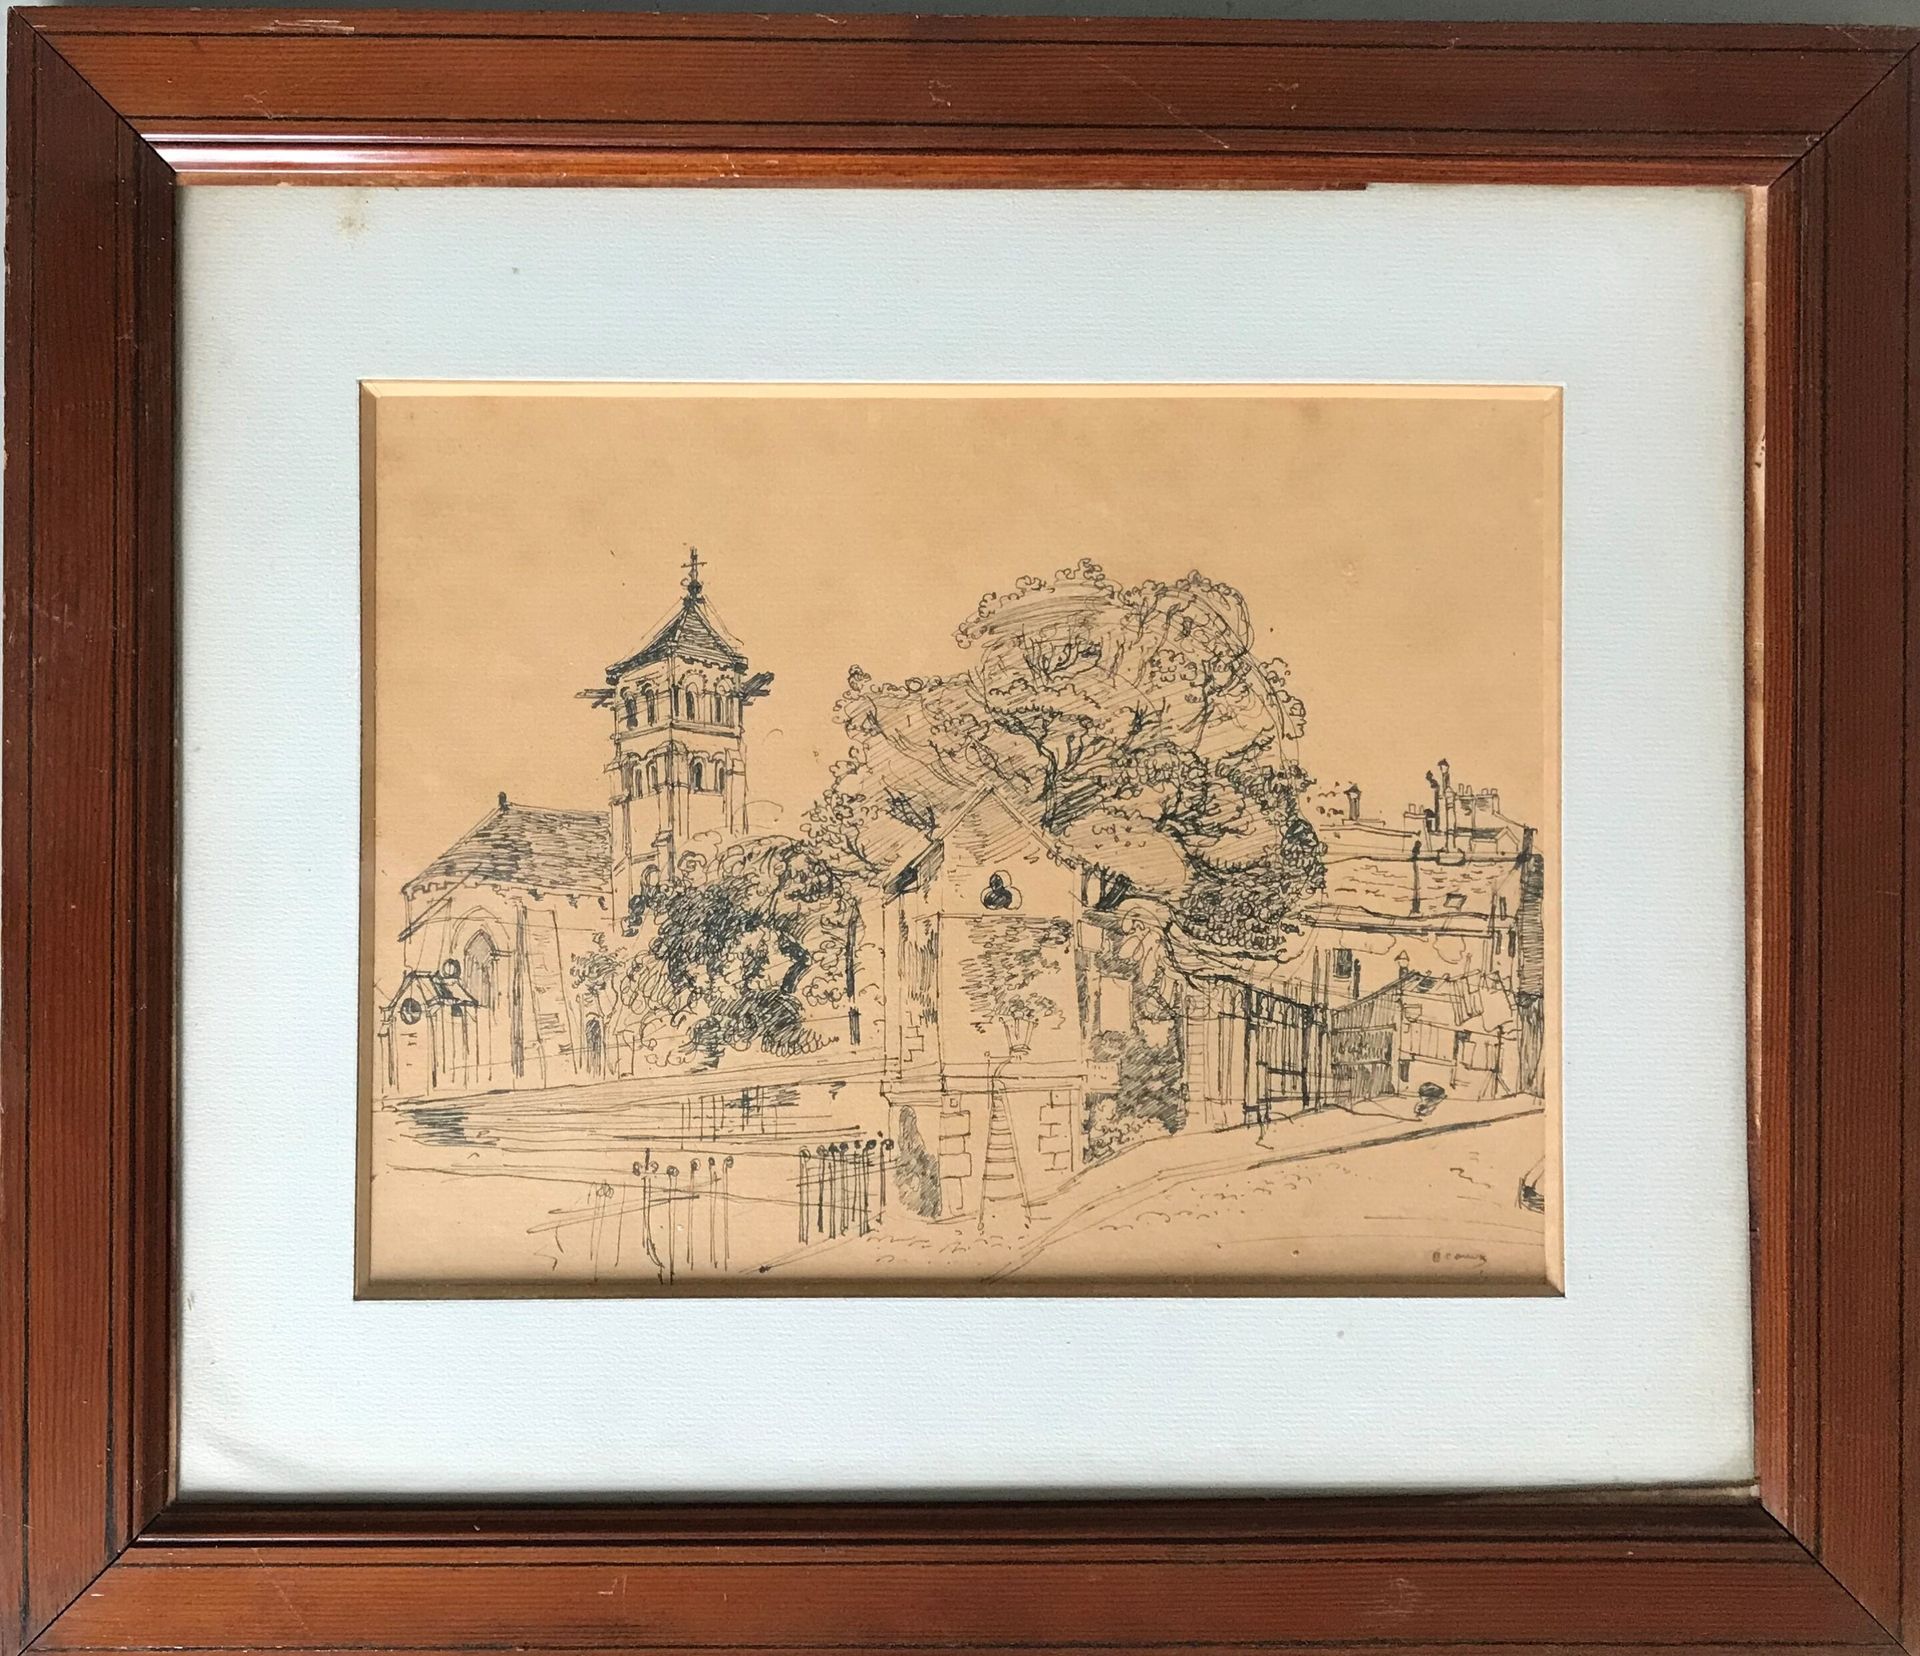 Null 雅克-贝瓦 (1889- ?)

教堂和街道的景色

铅笔画

右下方有签名

22,5 x 30 cm

带圆角的木质框架